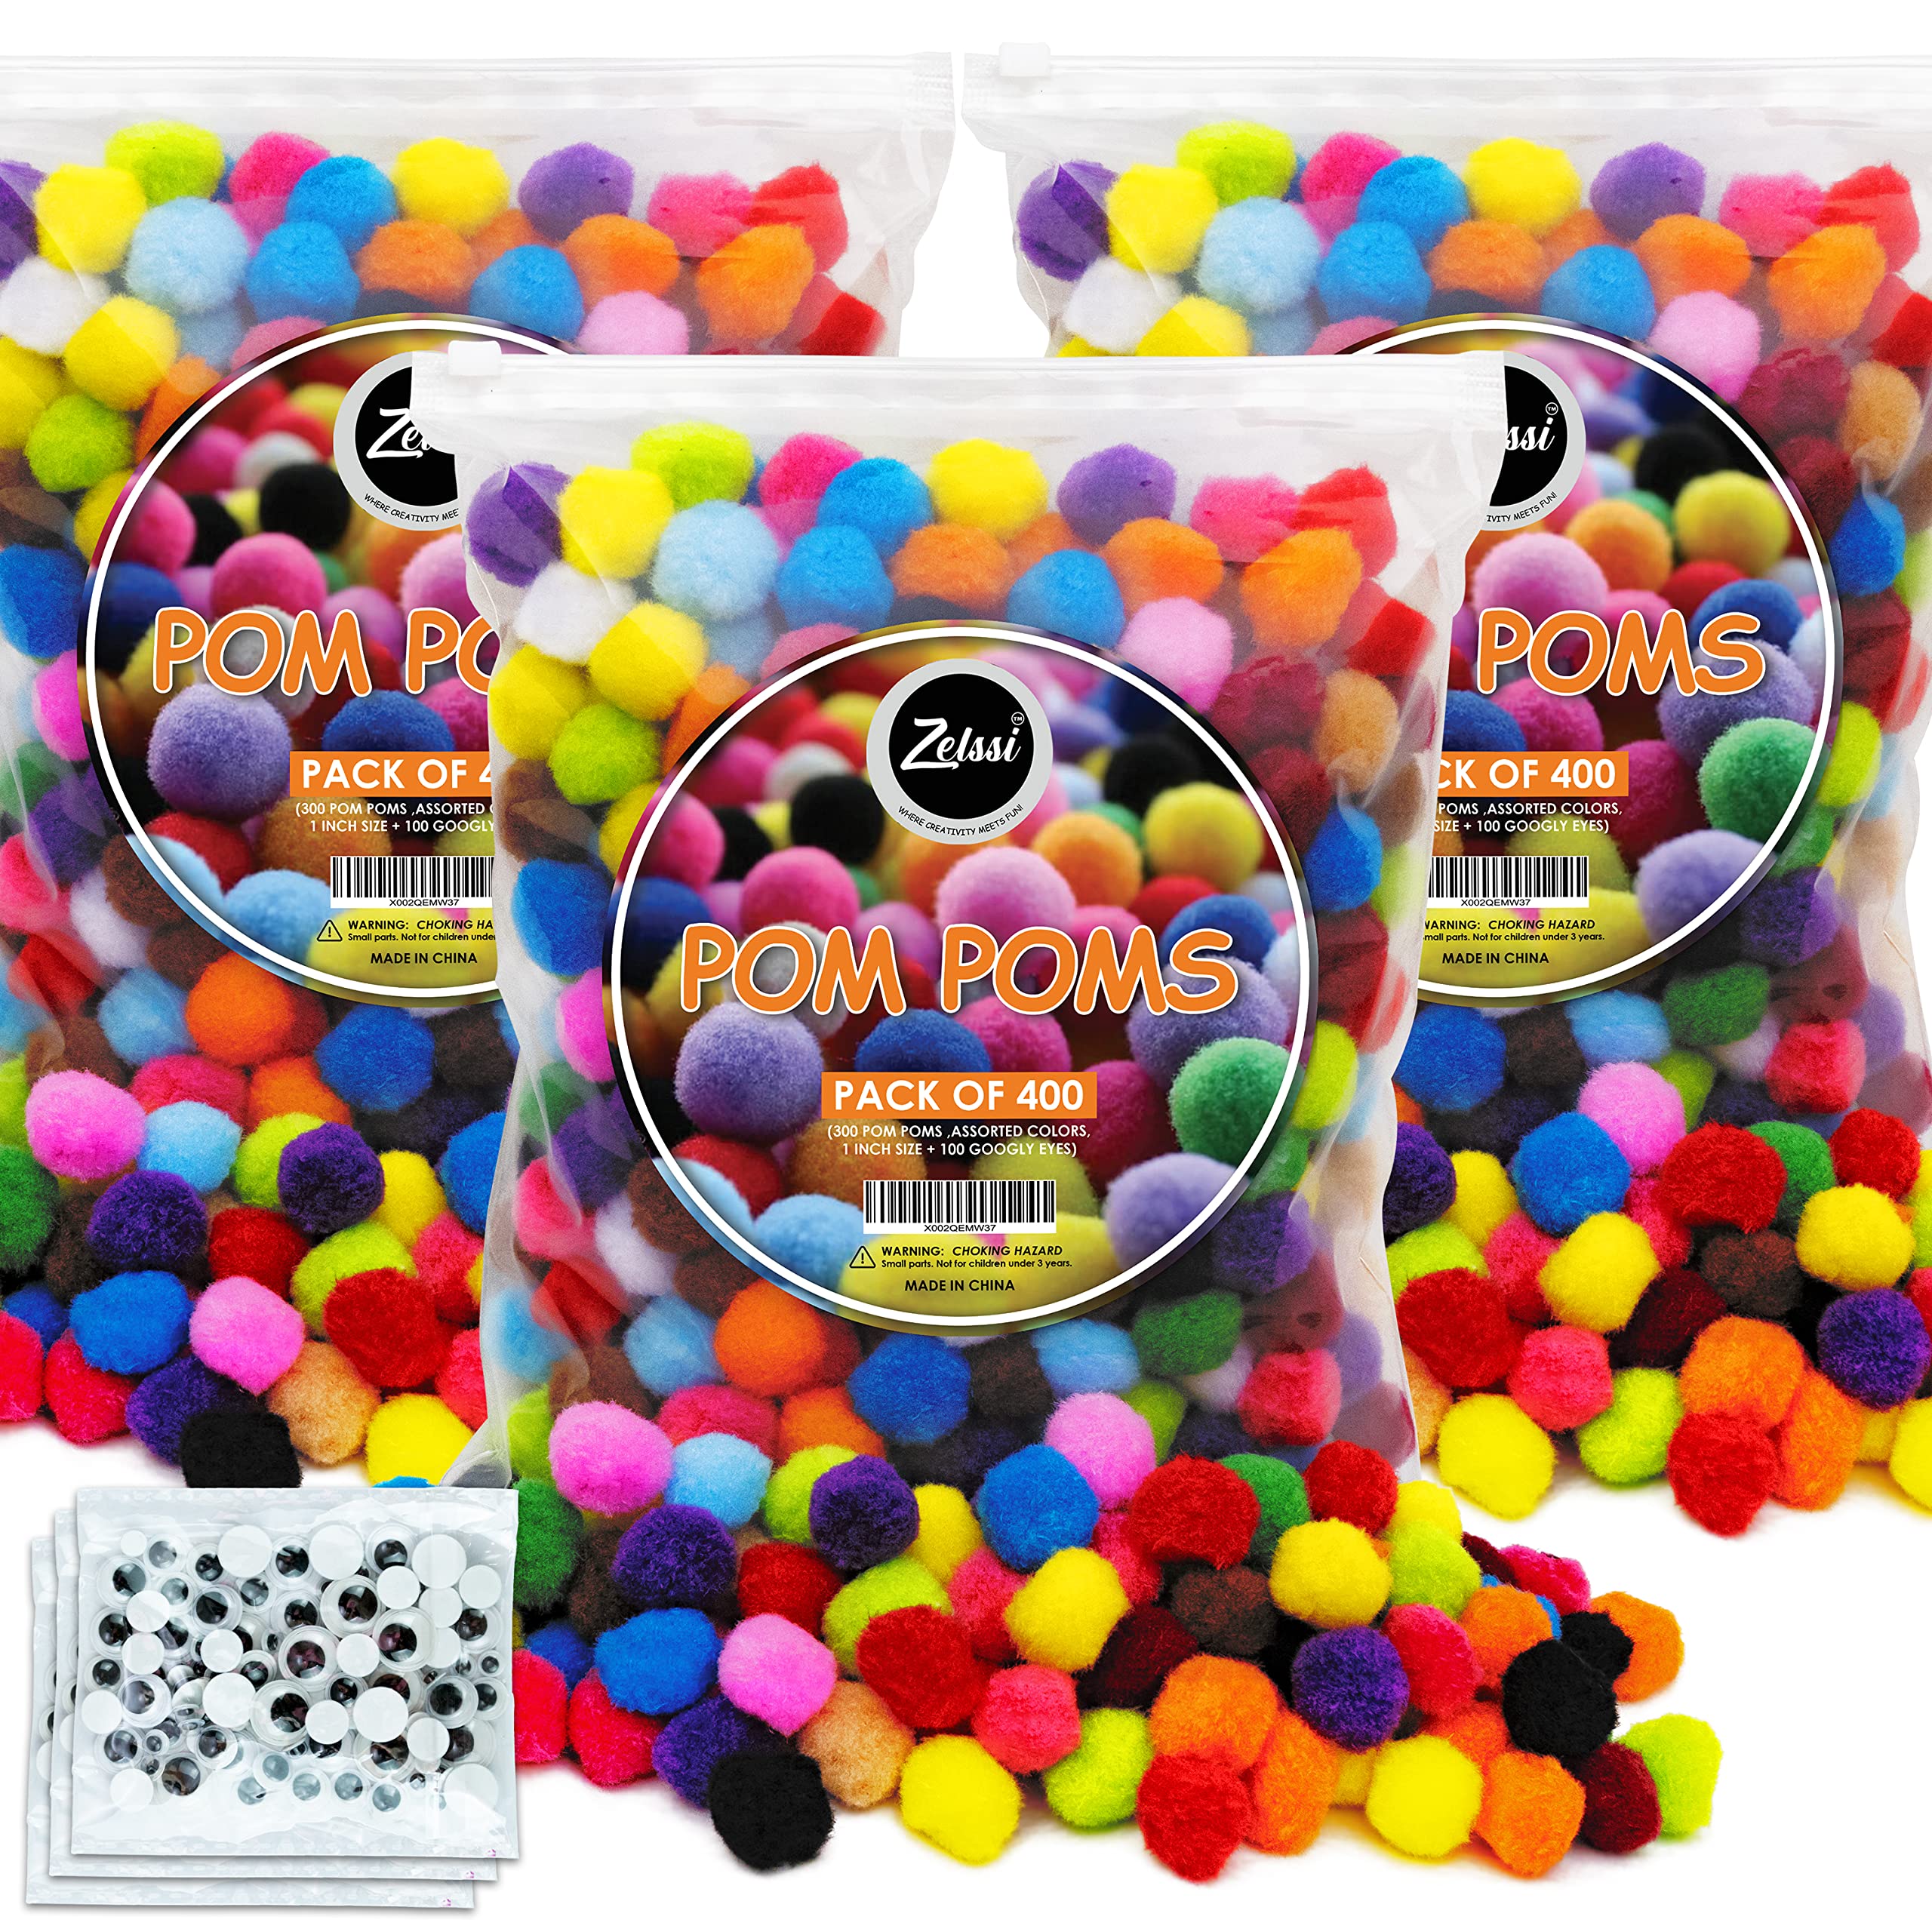 Zelssi Pom Poms - Pack of 1 300 1 inch Pom Pom Balls + 100 Googly